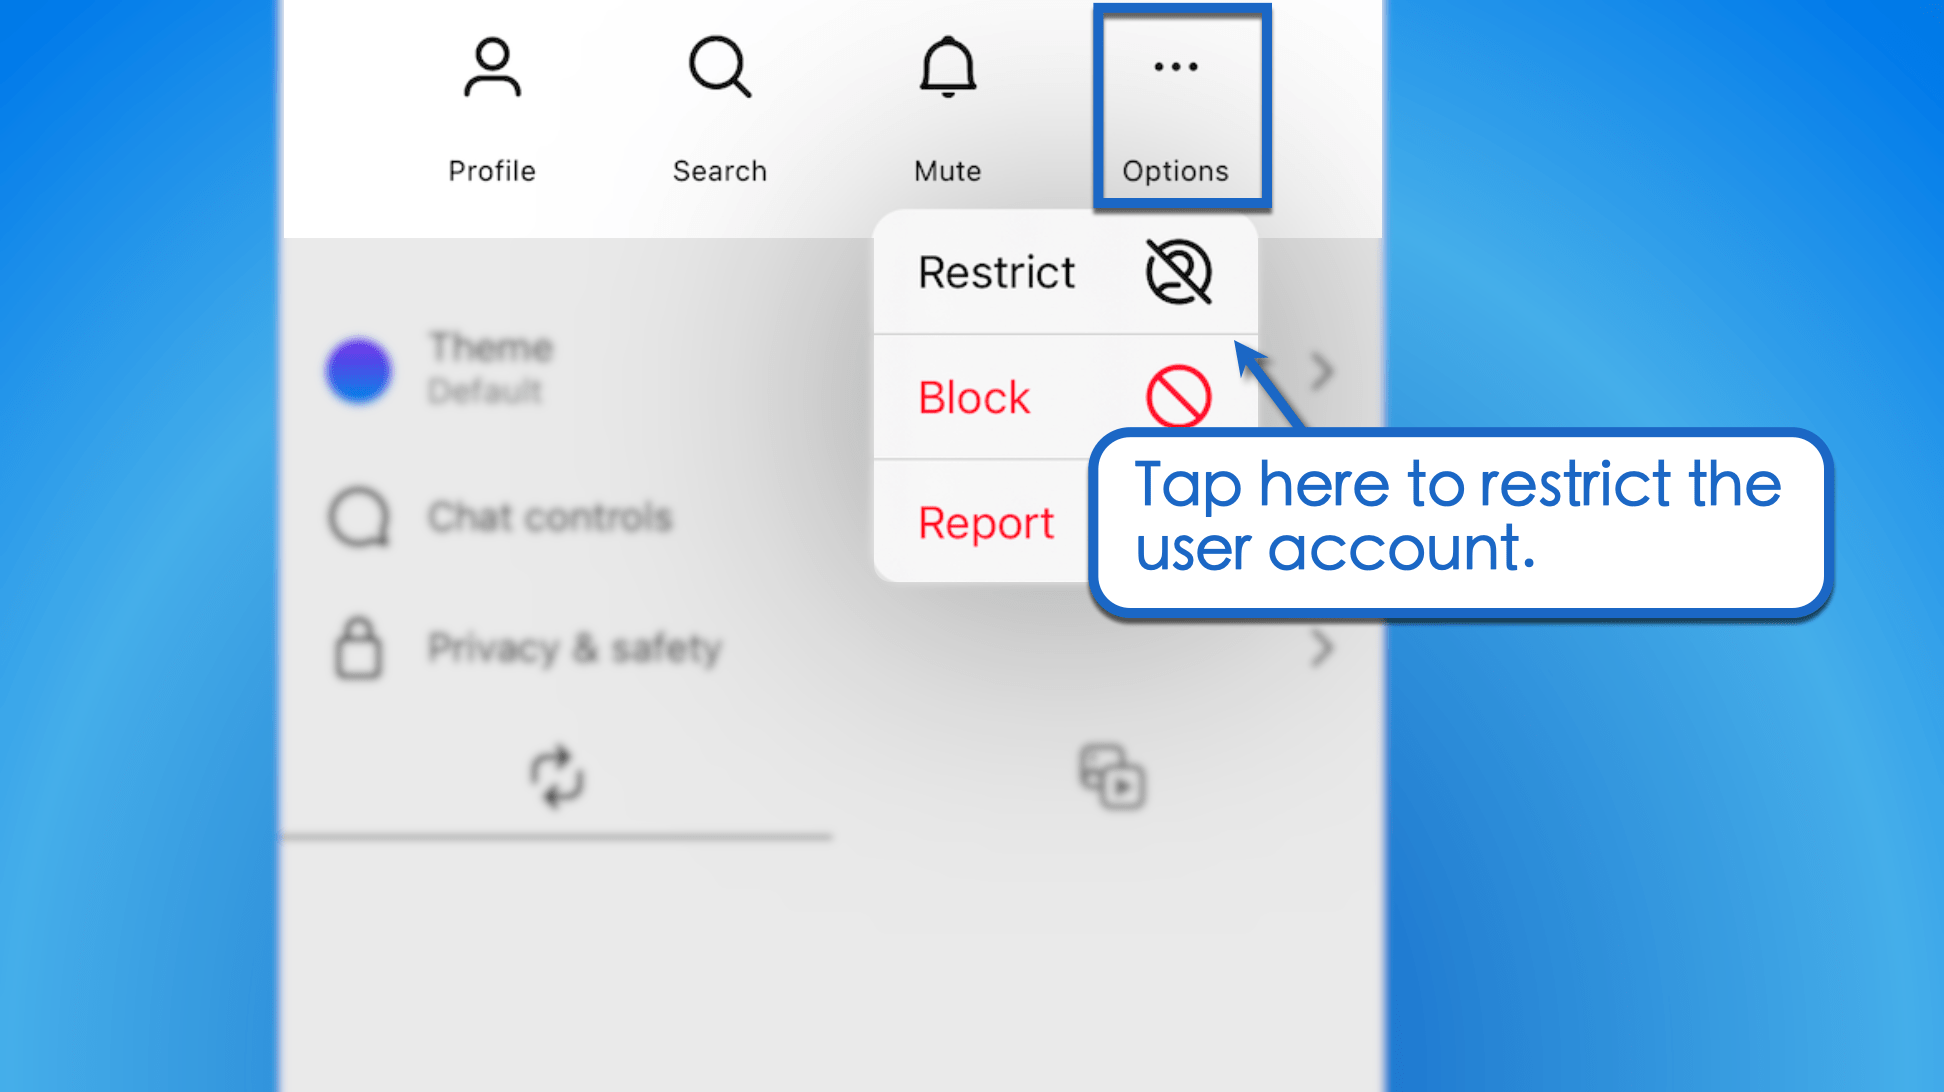 Restrict account.